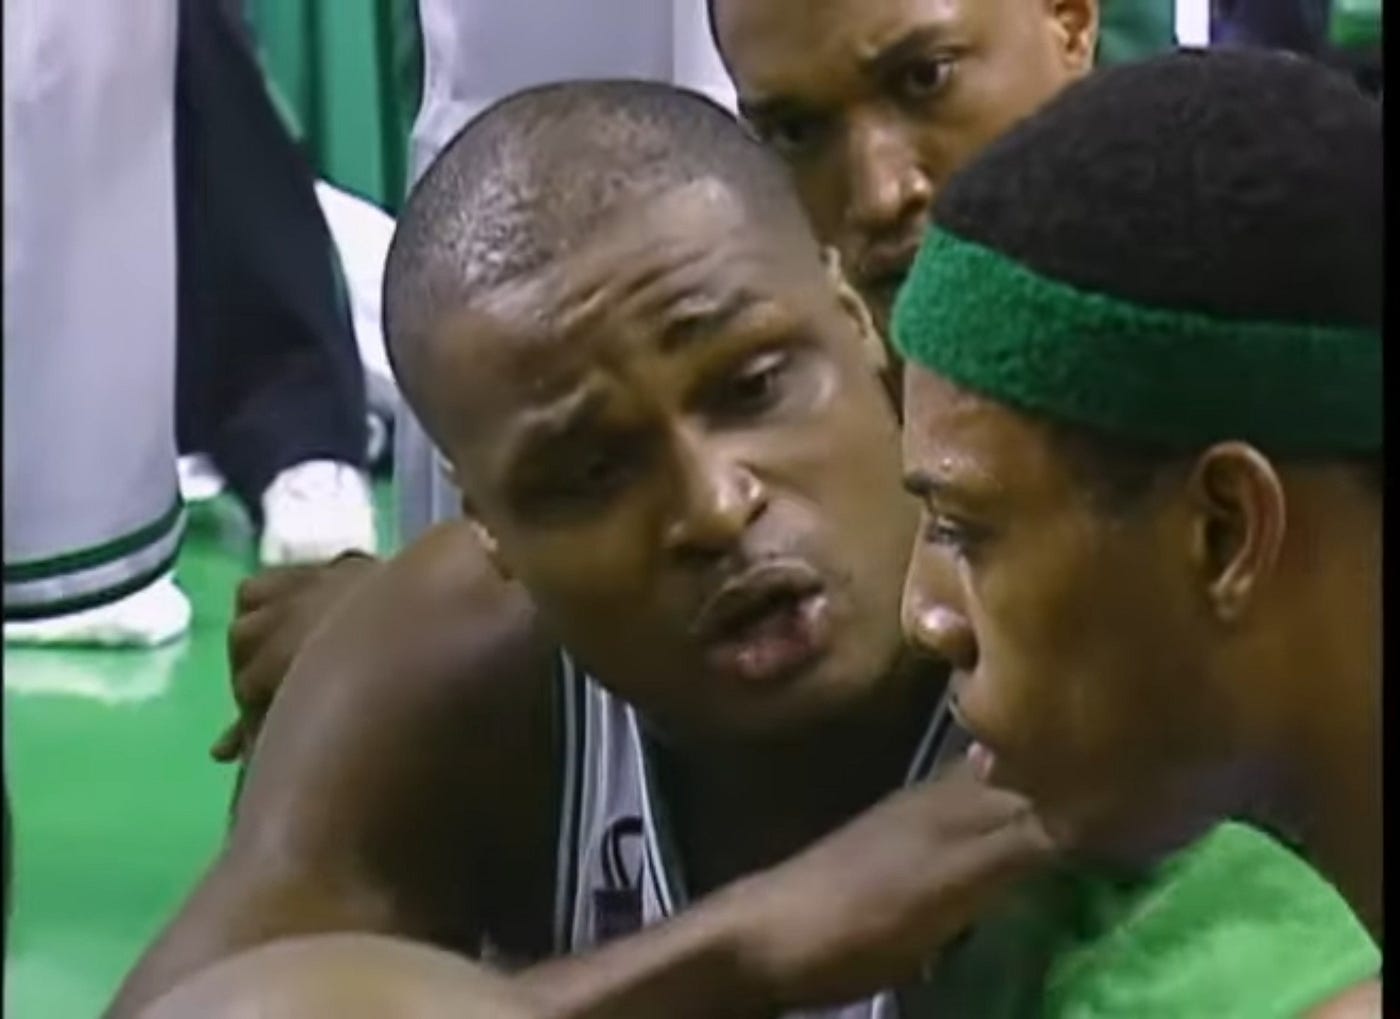 NBA Playoffs Game 3 - Celtics vs Nets: Final score and highlights